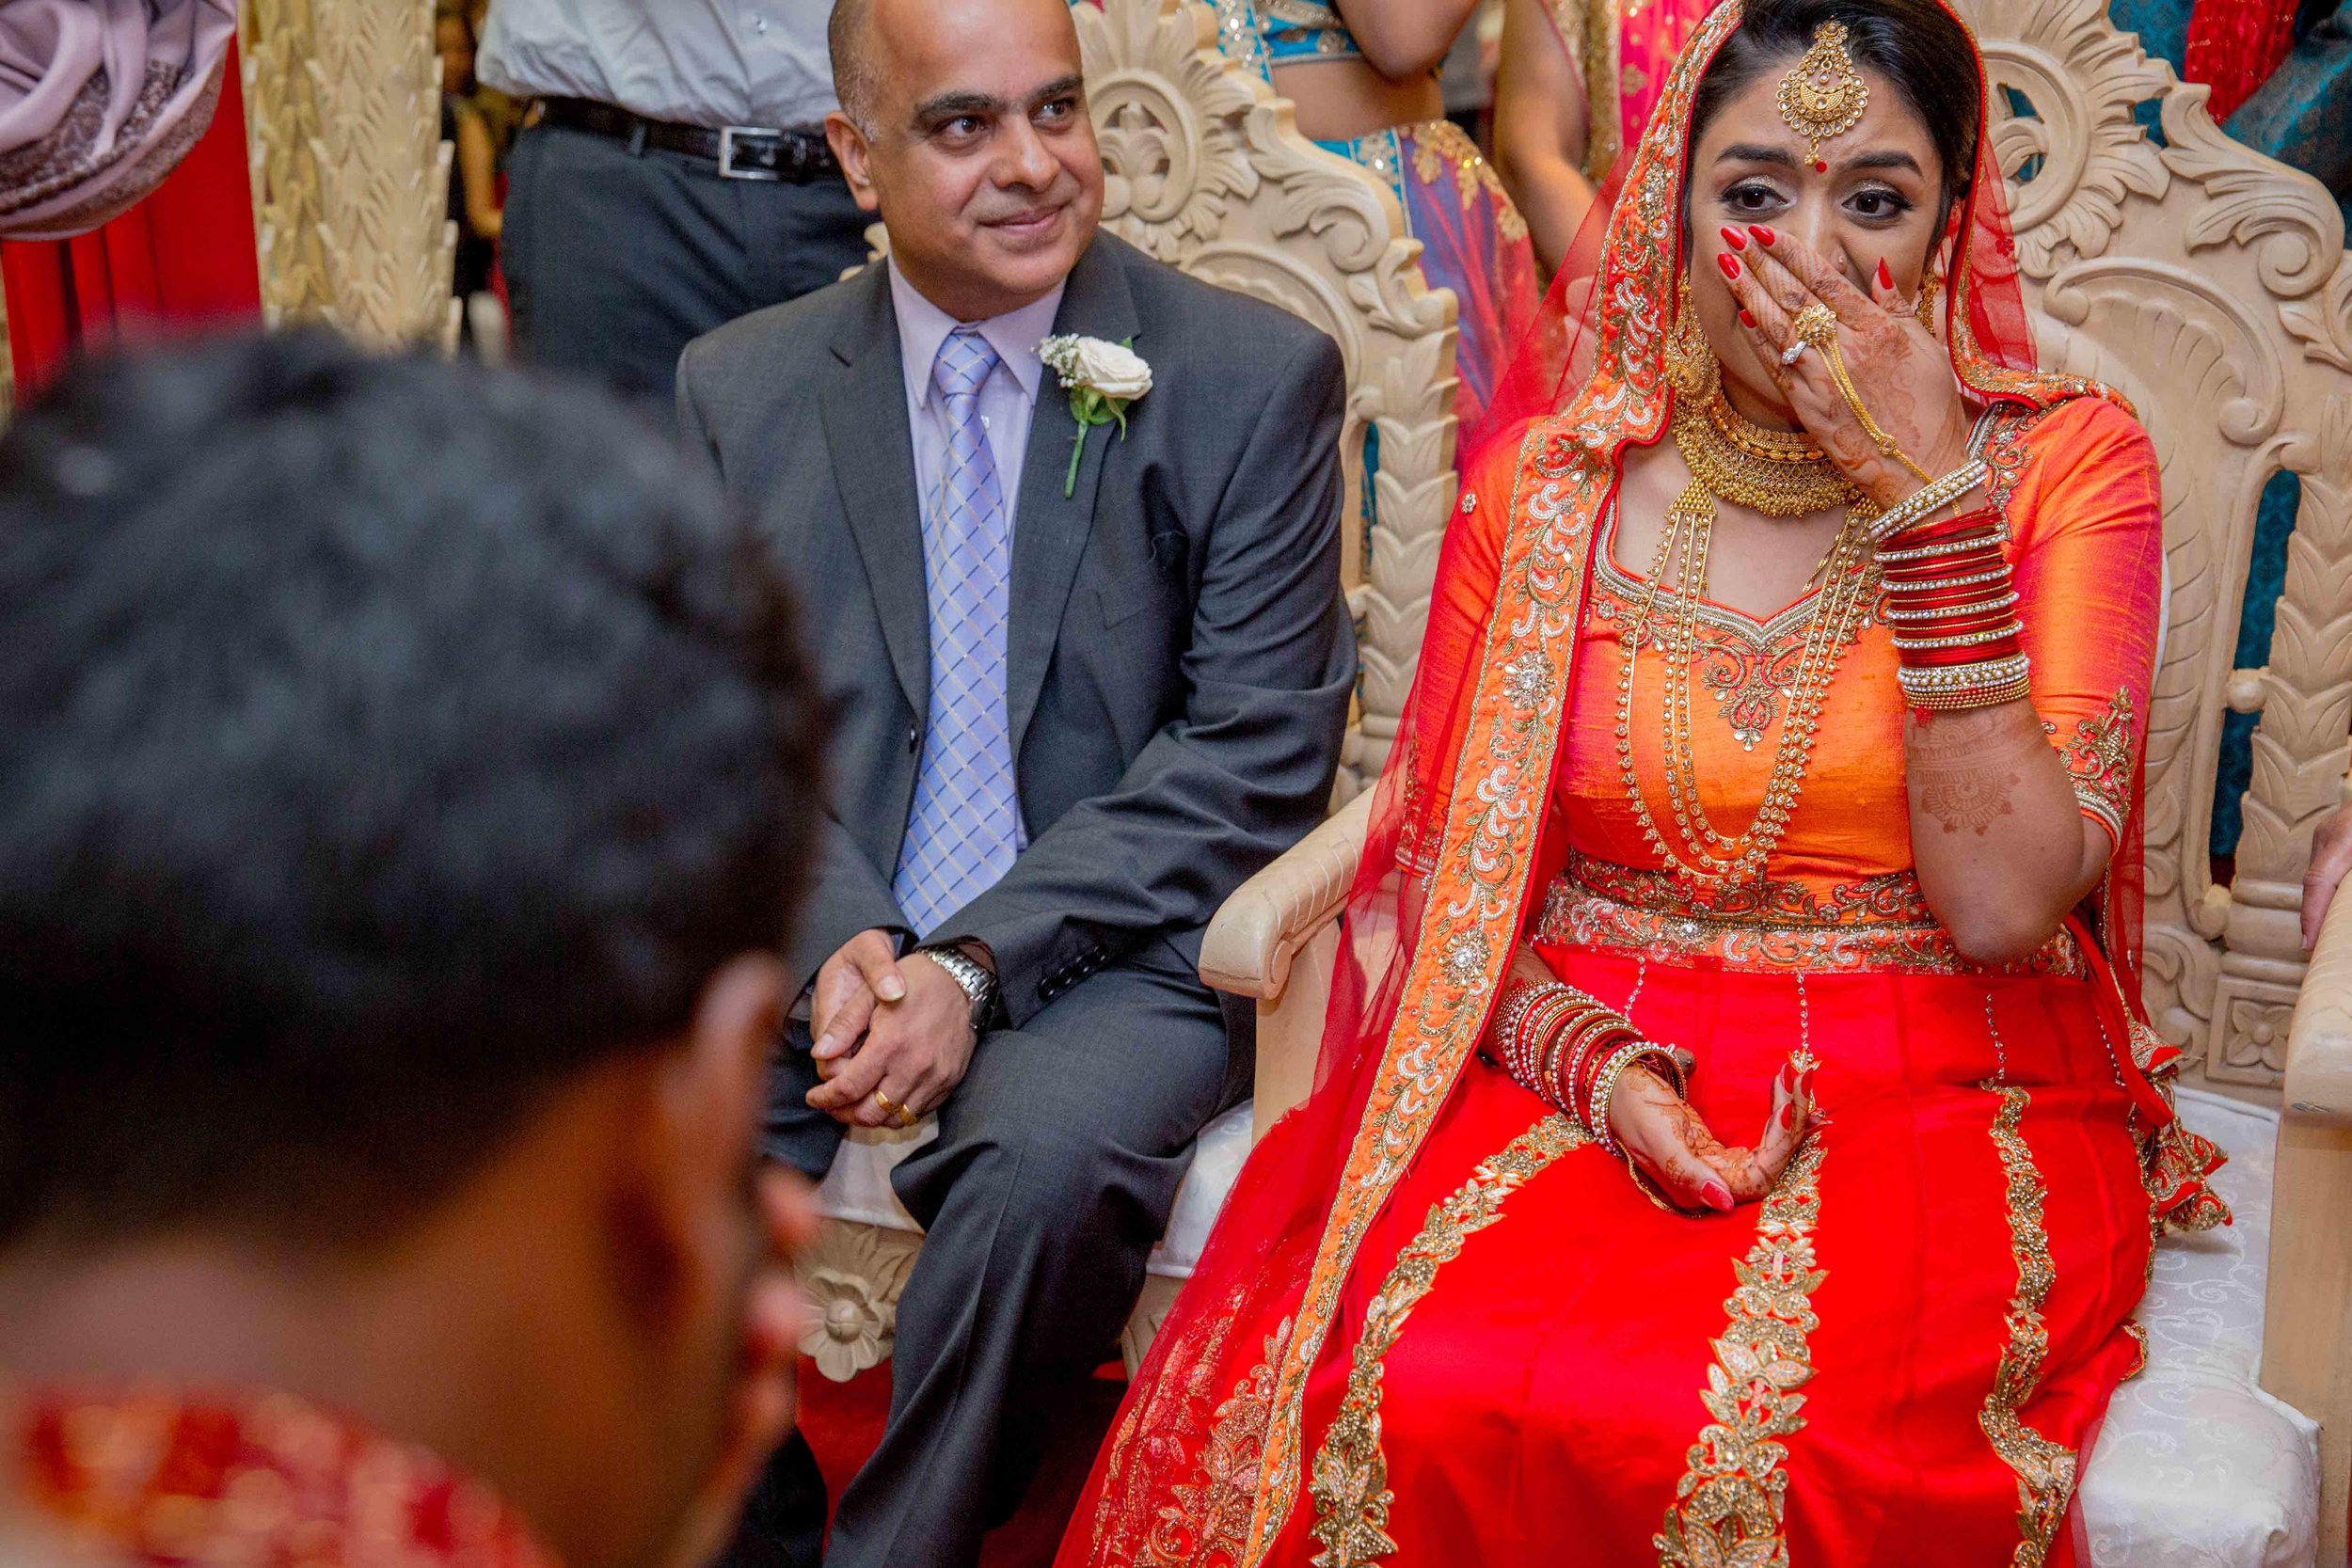 premier-banquetting-london-Hindu-asian-wedding-photographer-natalia-smith-photography-19.jpg